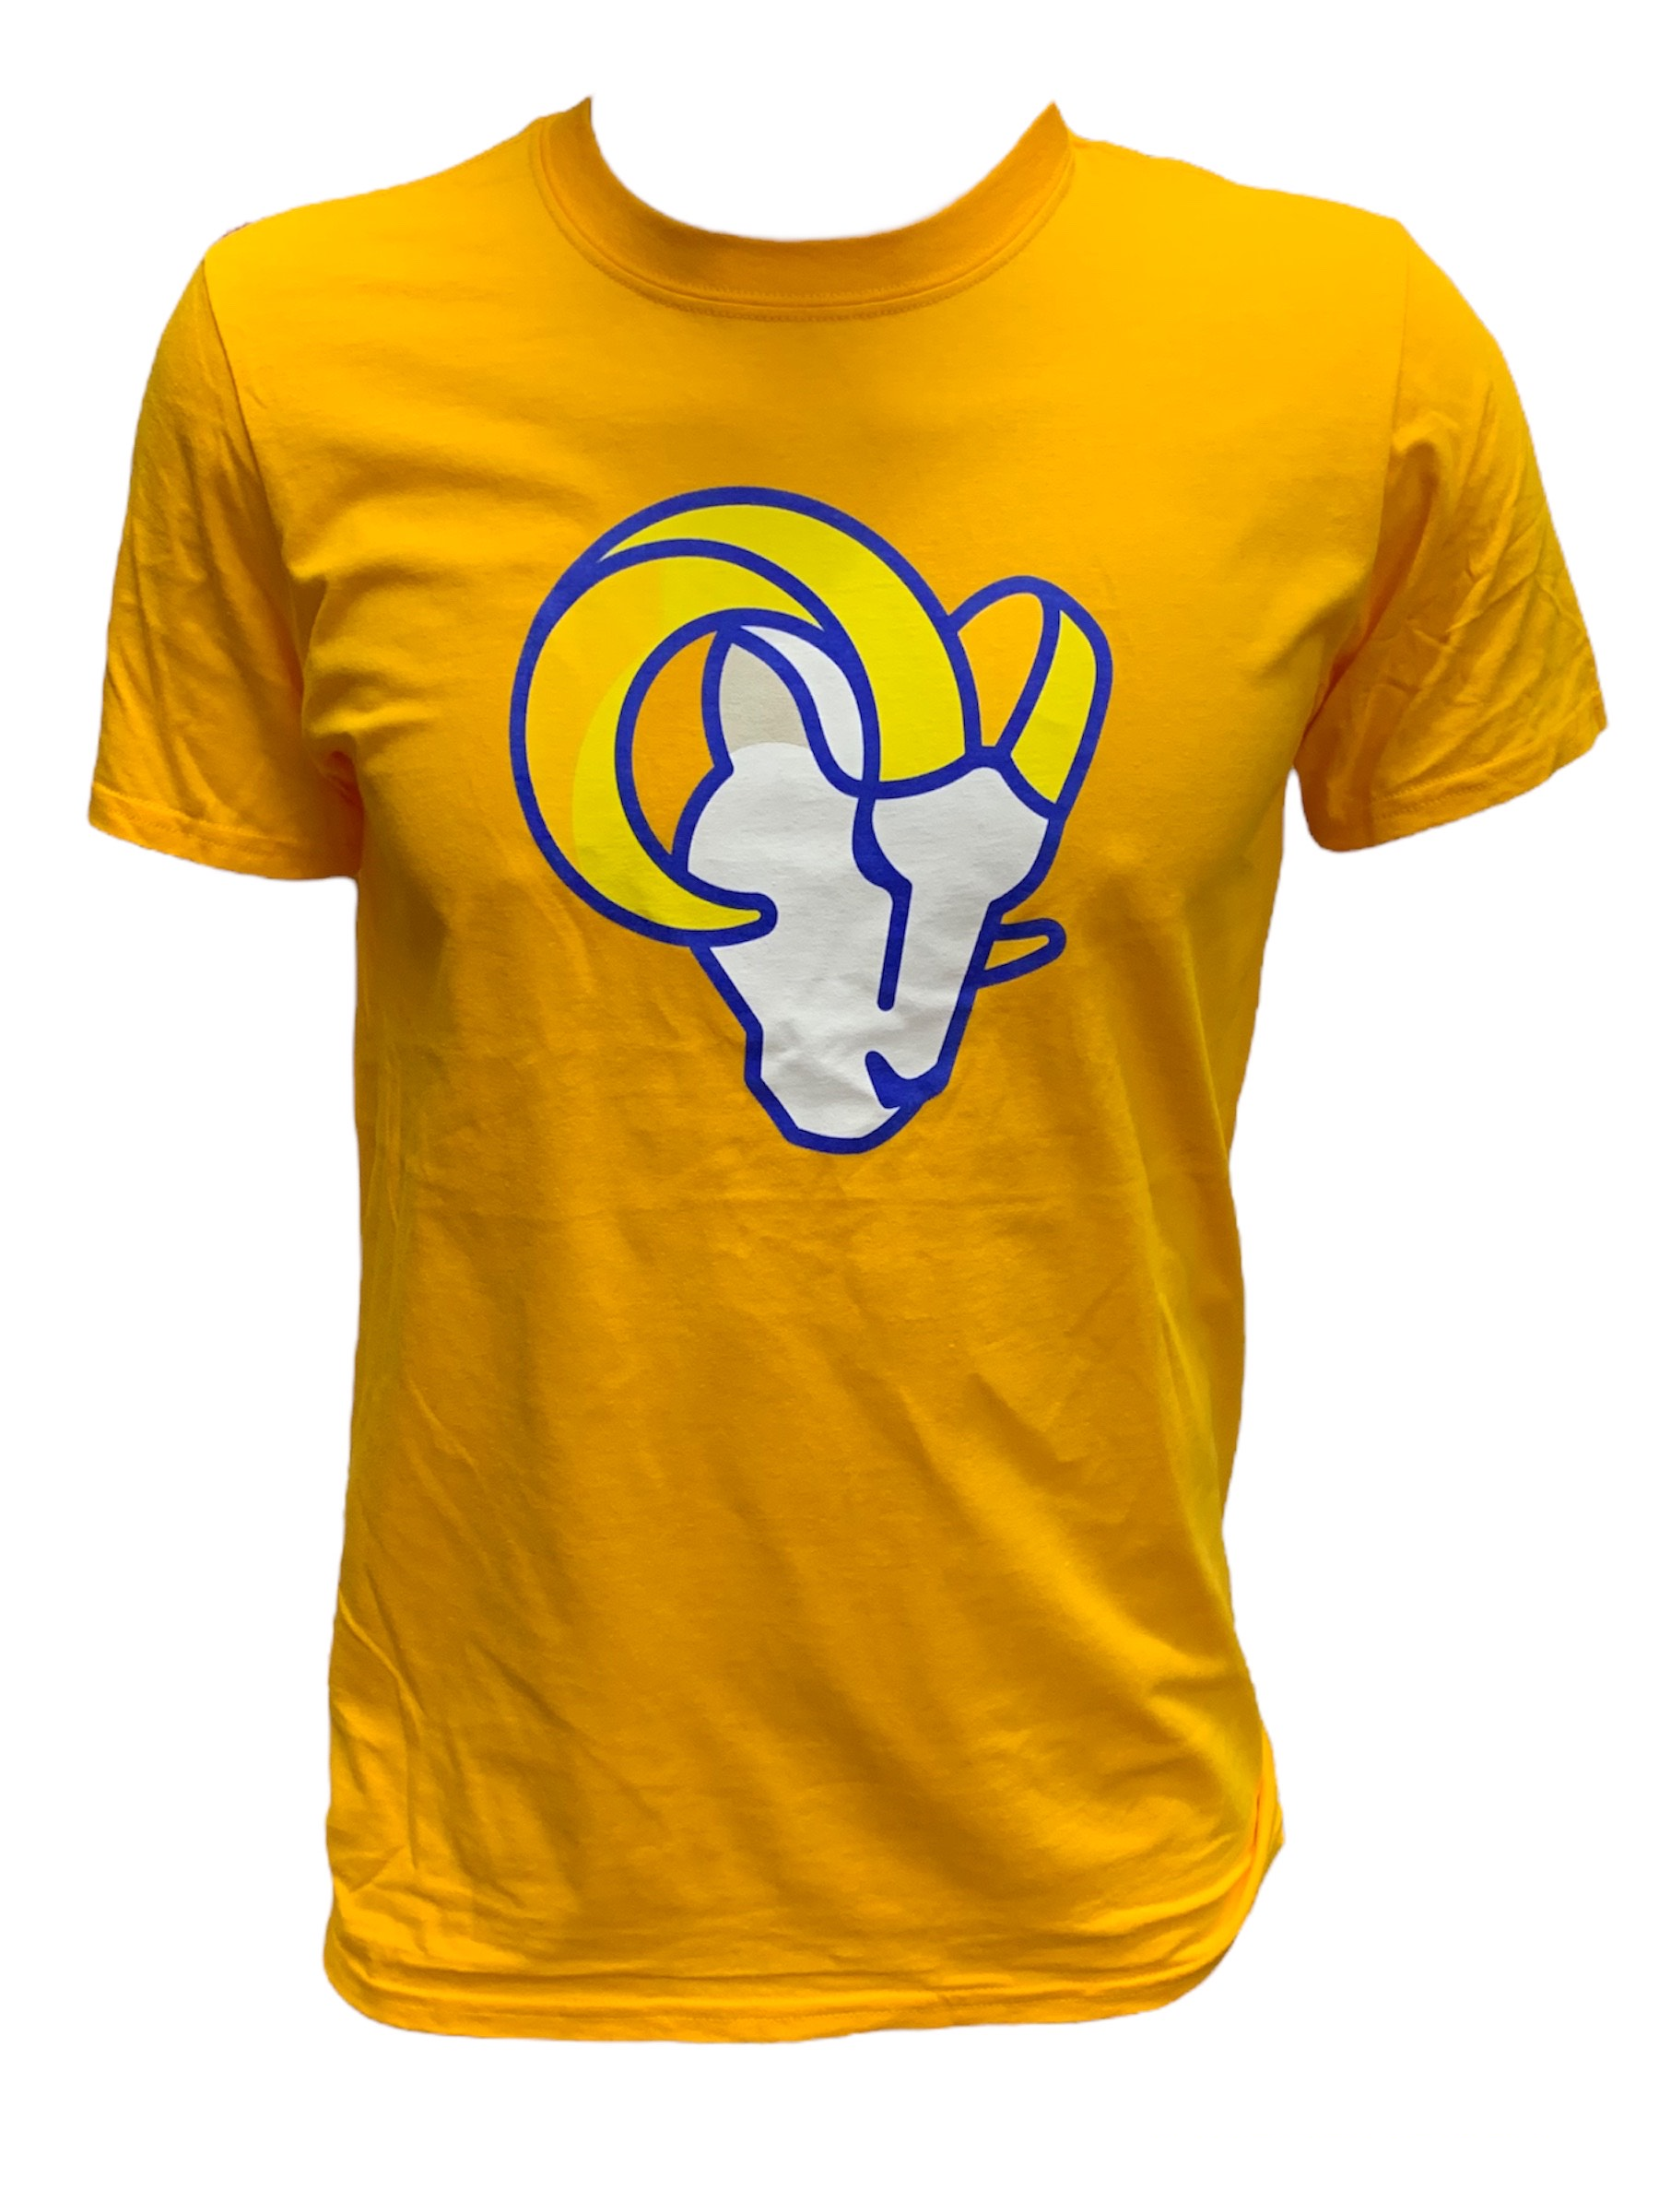 Men's Fanatics Branded Royal/Gold Los Angeles Rams Player Pack T-Shirt Combo Set